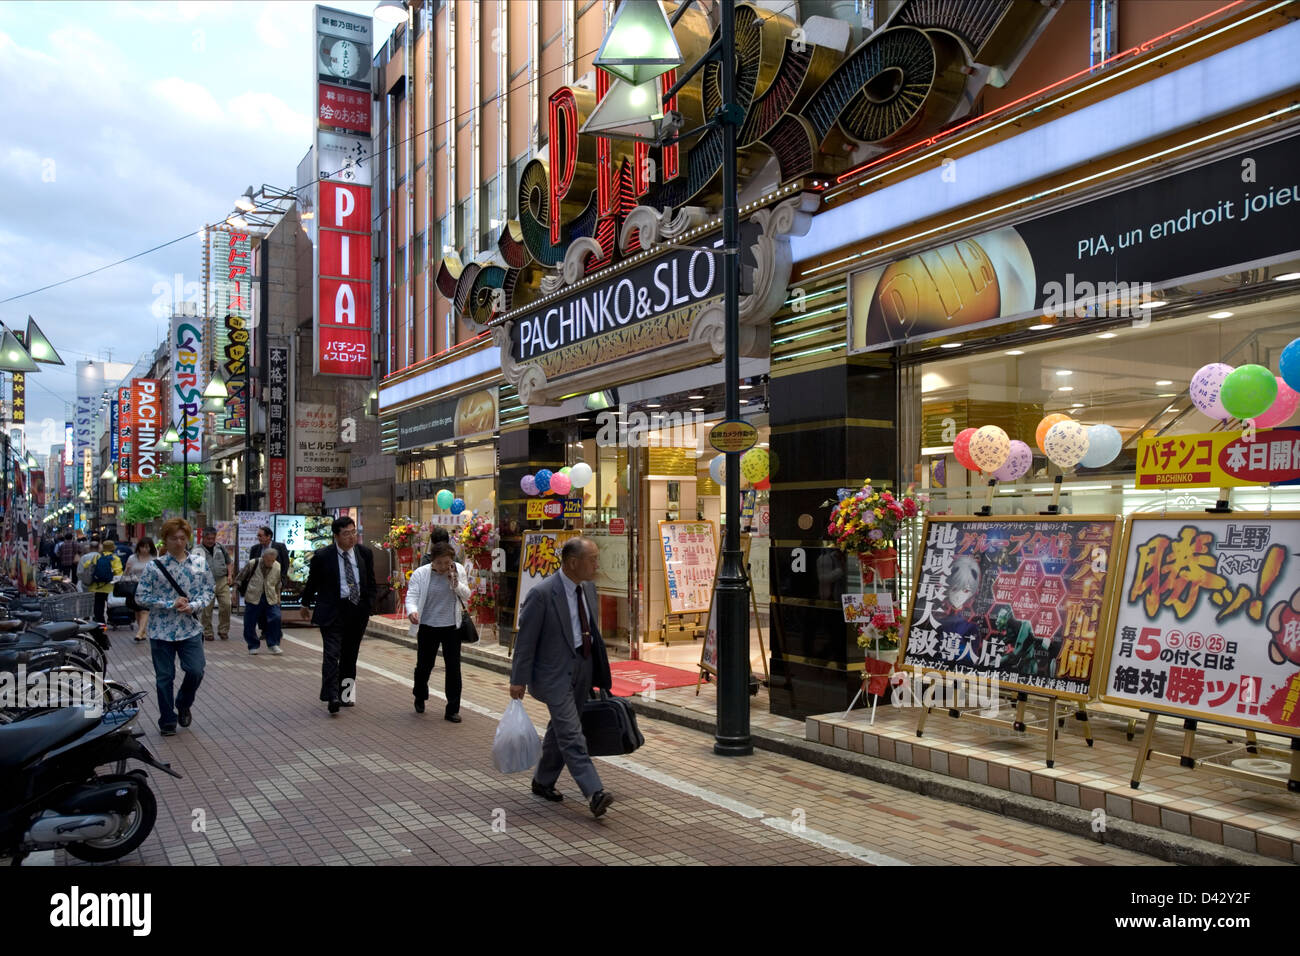 PIA Pachinko & Slot game parlor in the entertainment district of Okachimachi, Tokyo. Stock Photo